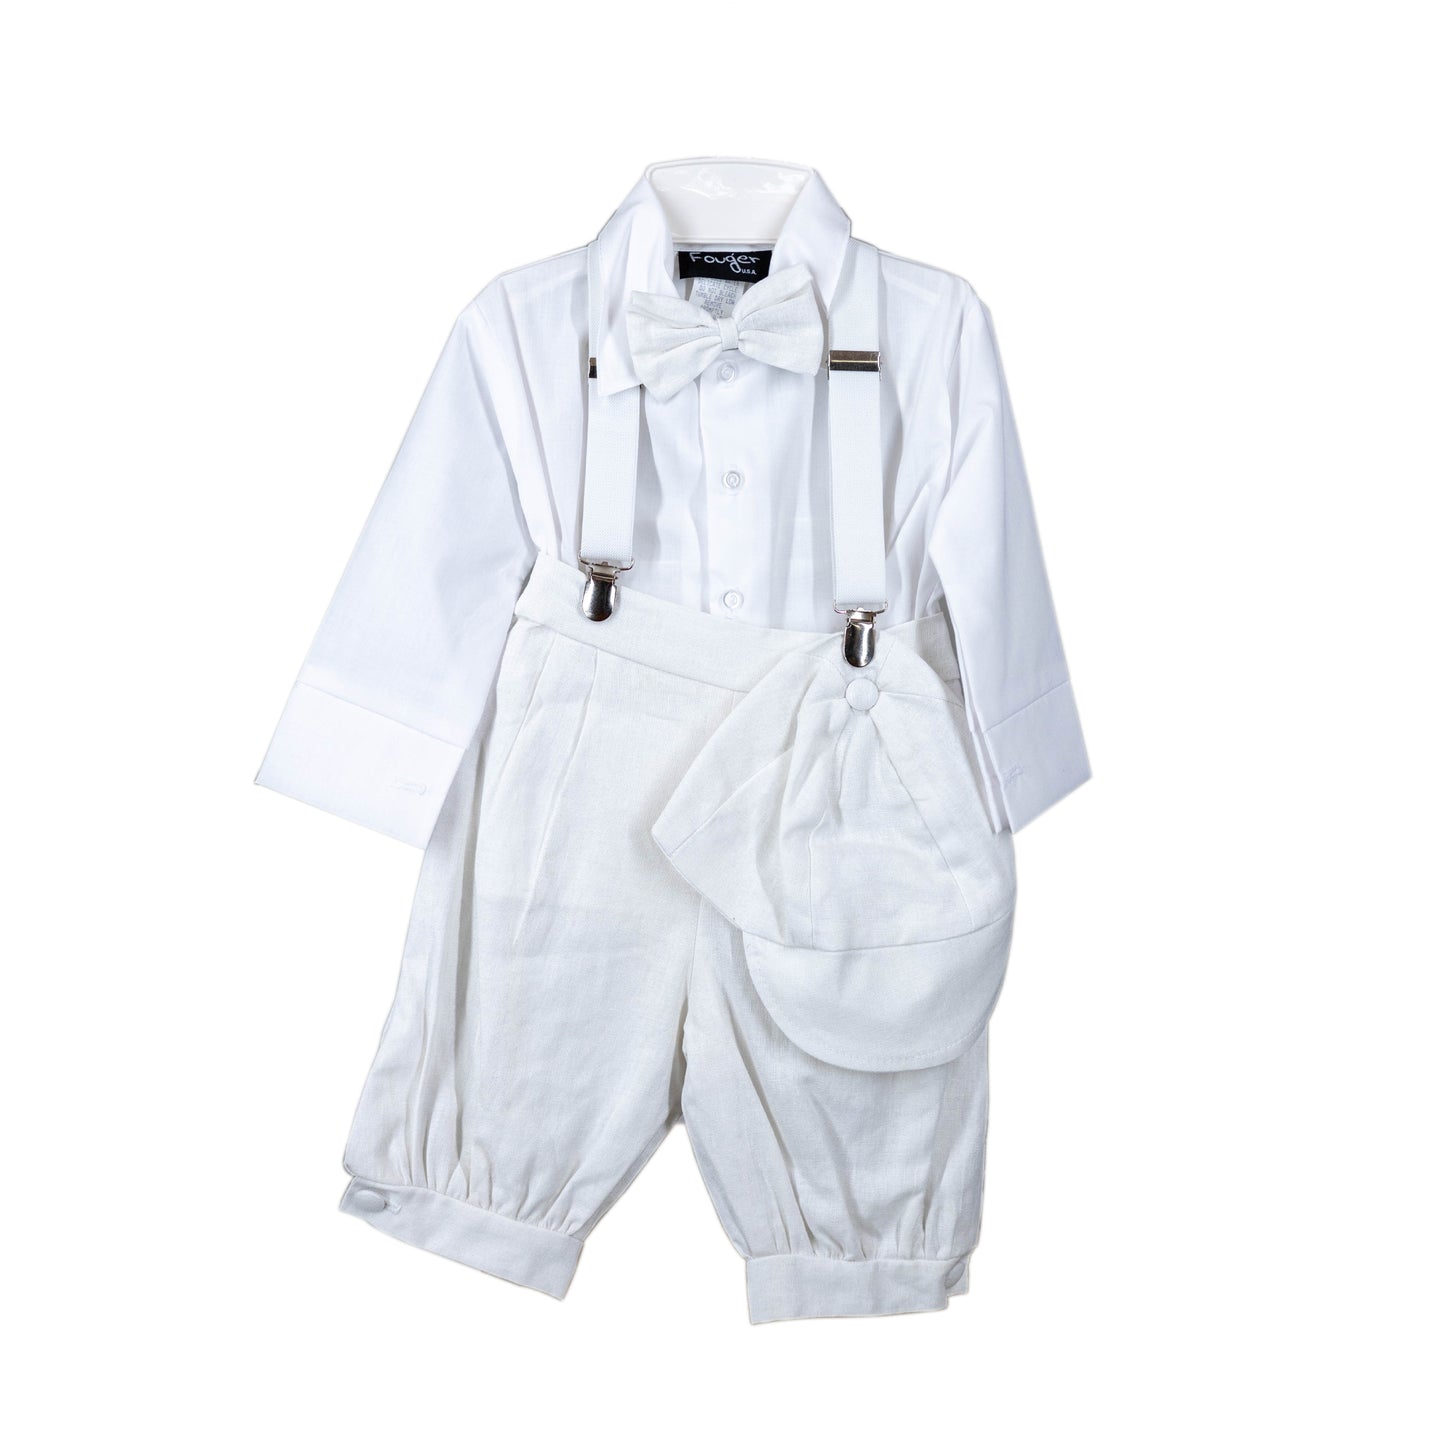 Execukids Linen 5 Piece Suit (White)